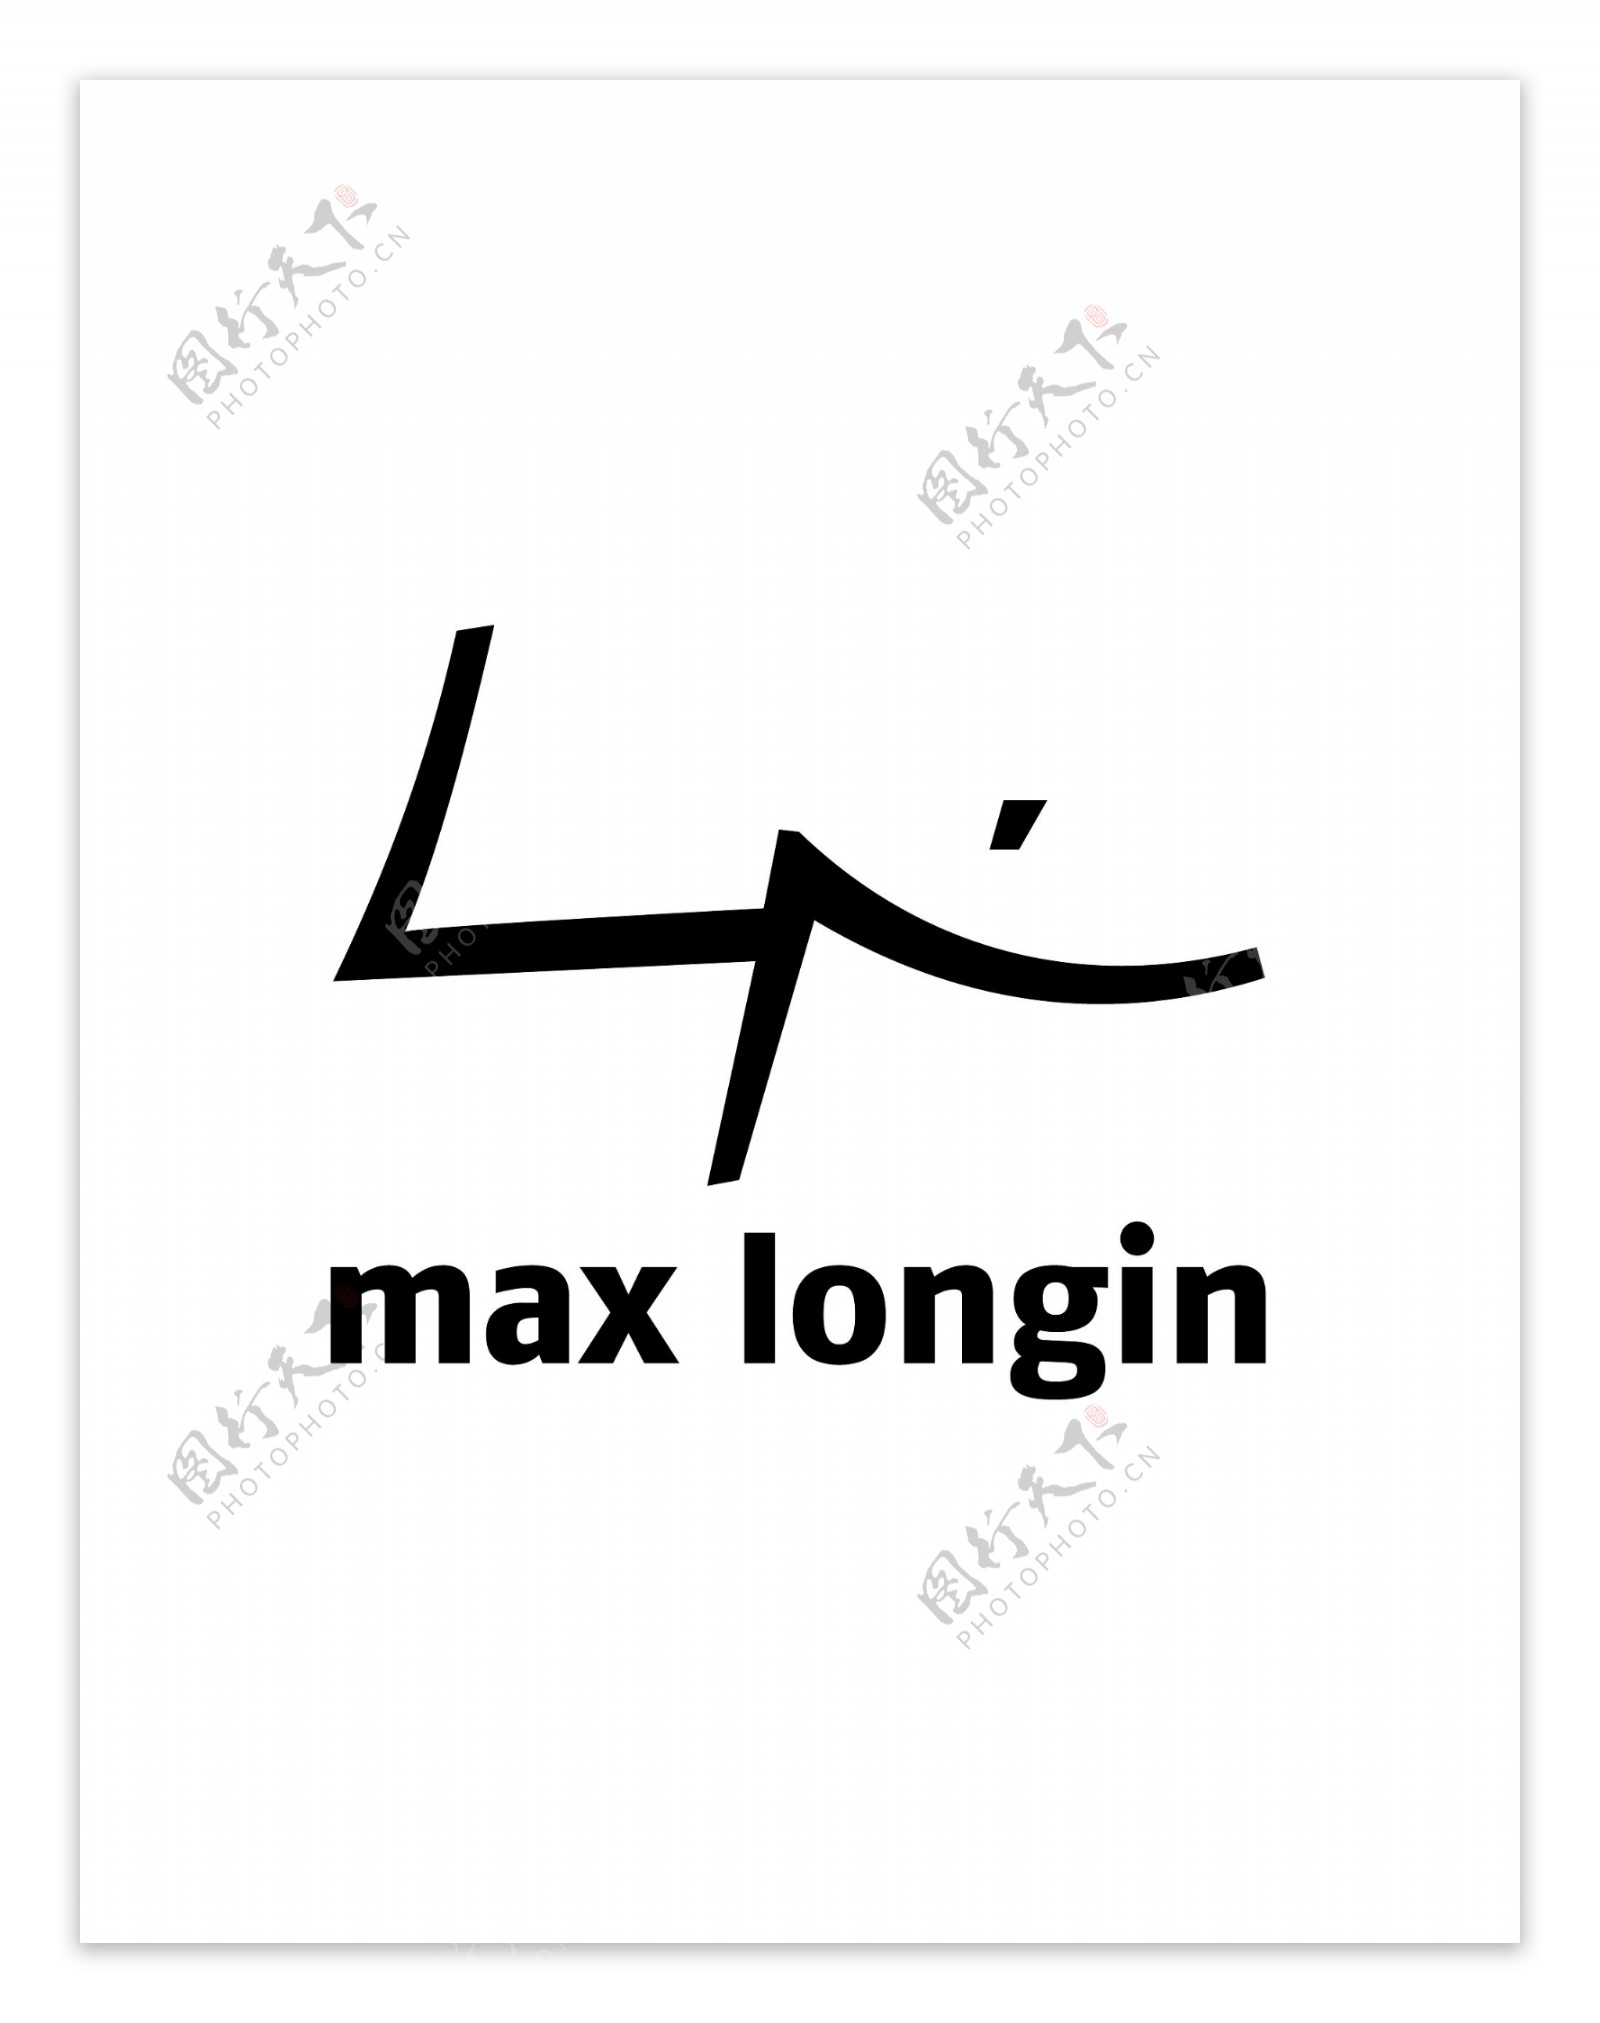 maxlonginfurnituredesignlogo设计欣赏maxlonginfurnituredesign工作室LOGO下载标志设计欣赏